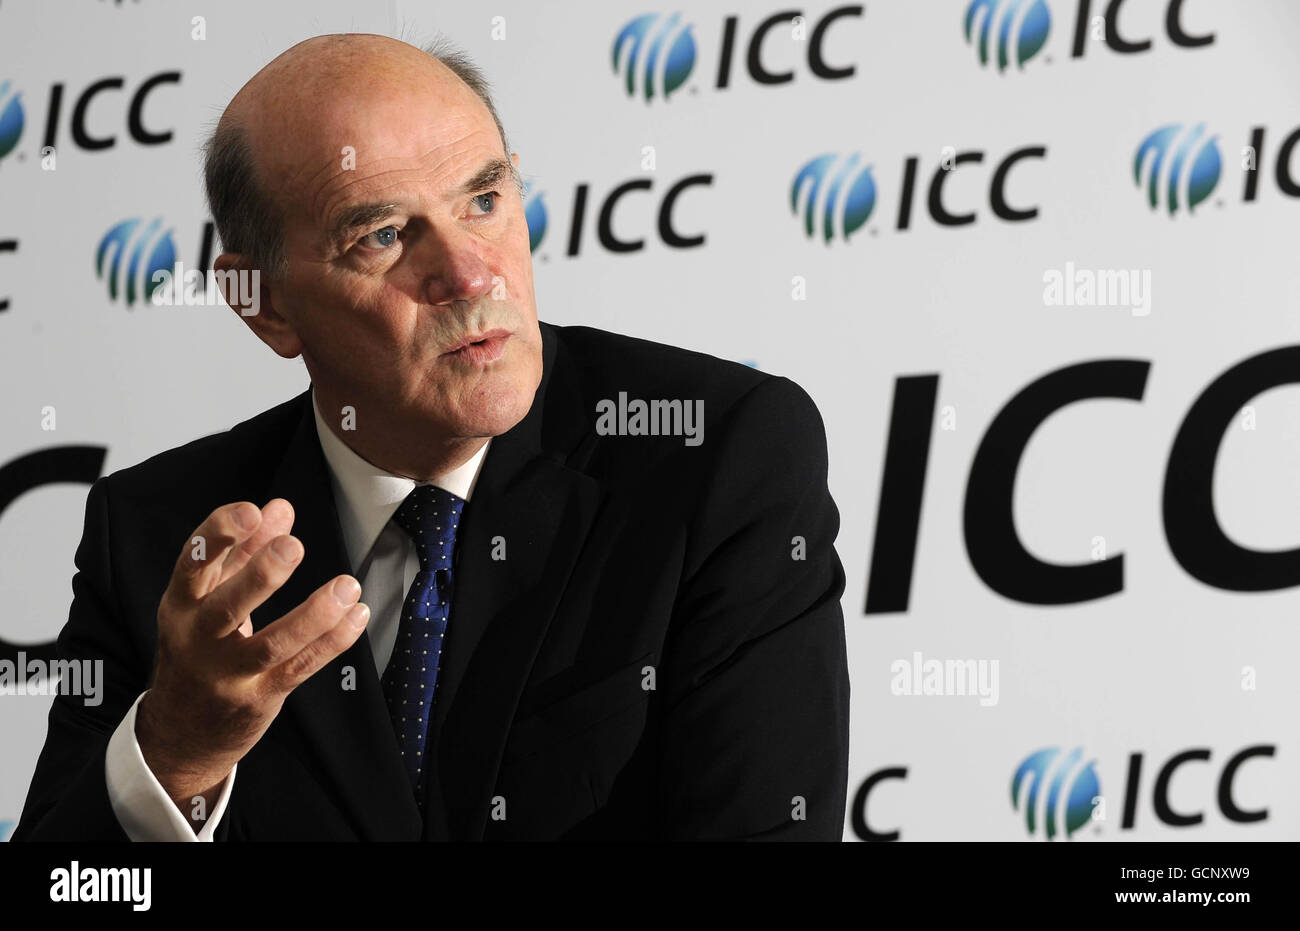 ICC Cricket - Conférence de presse - Lords Cricket Ground Banque D'Images